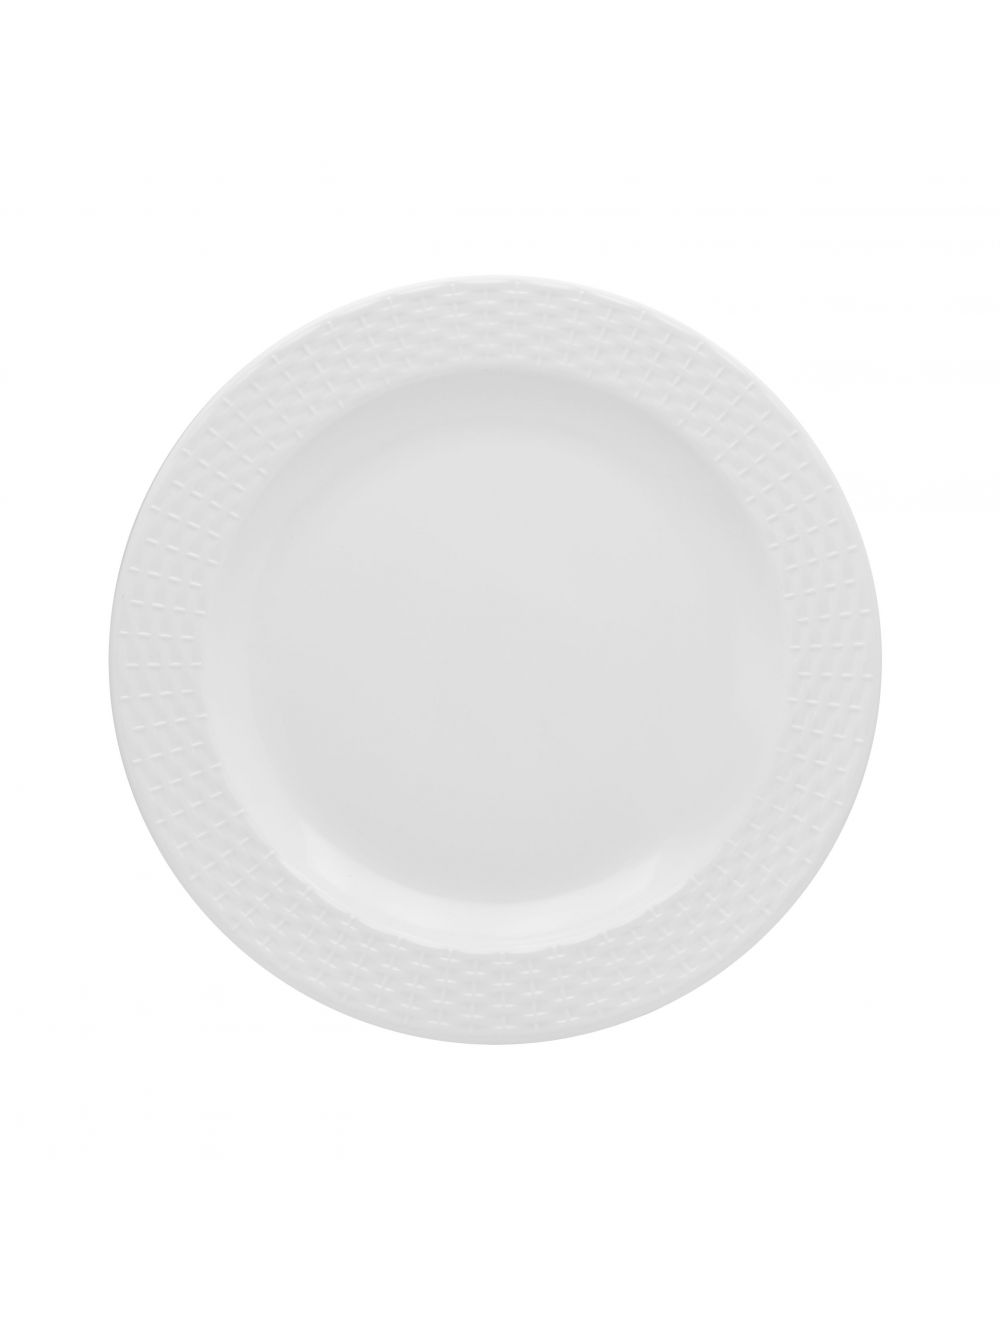 Dinewell Melamine Side Plate White Topaz-DWP9003W